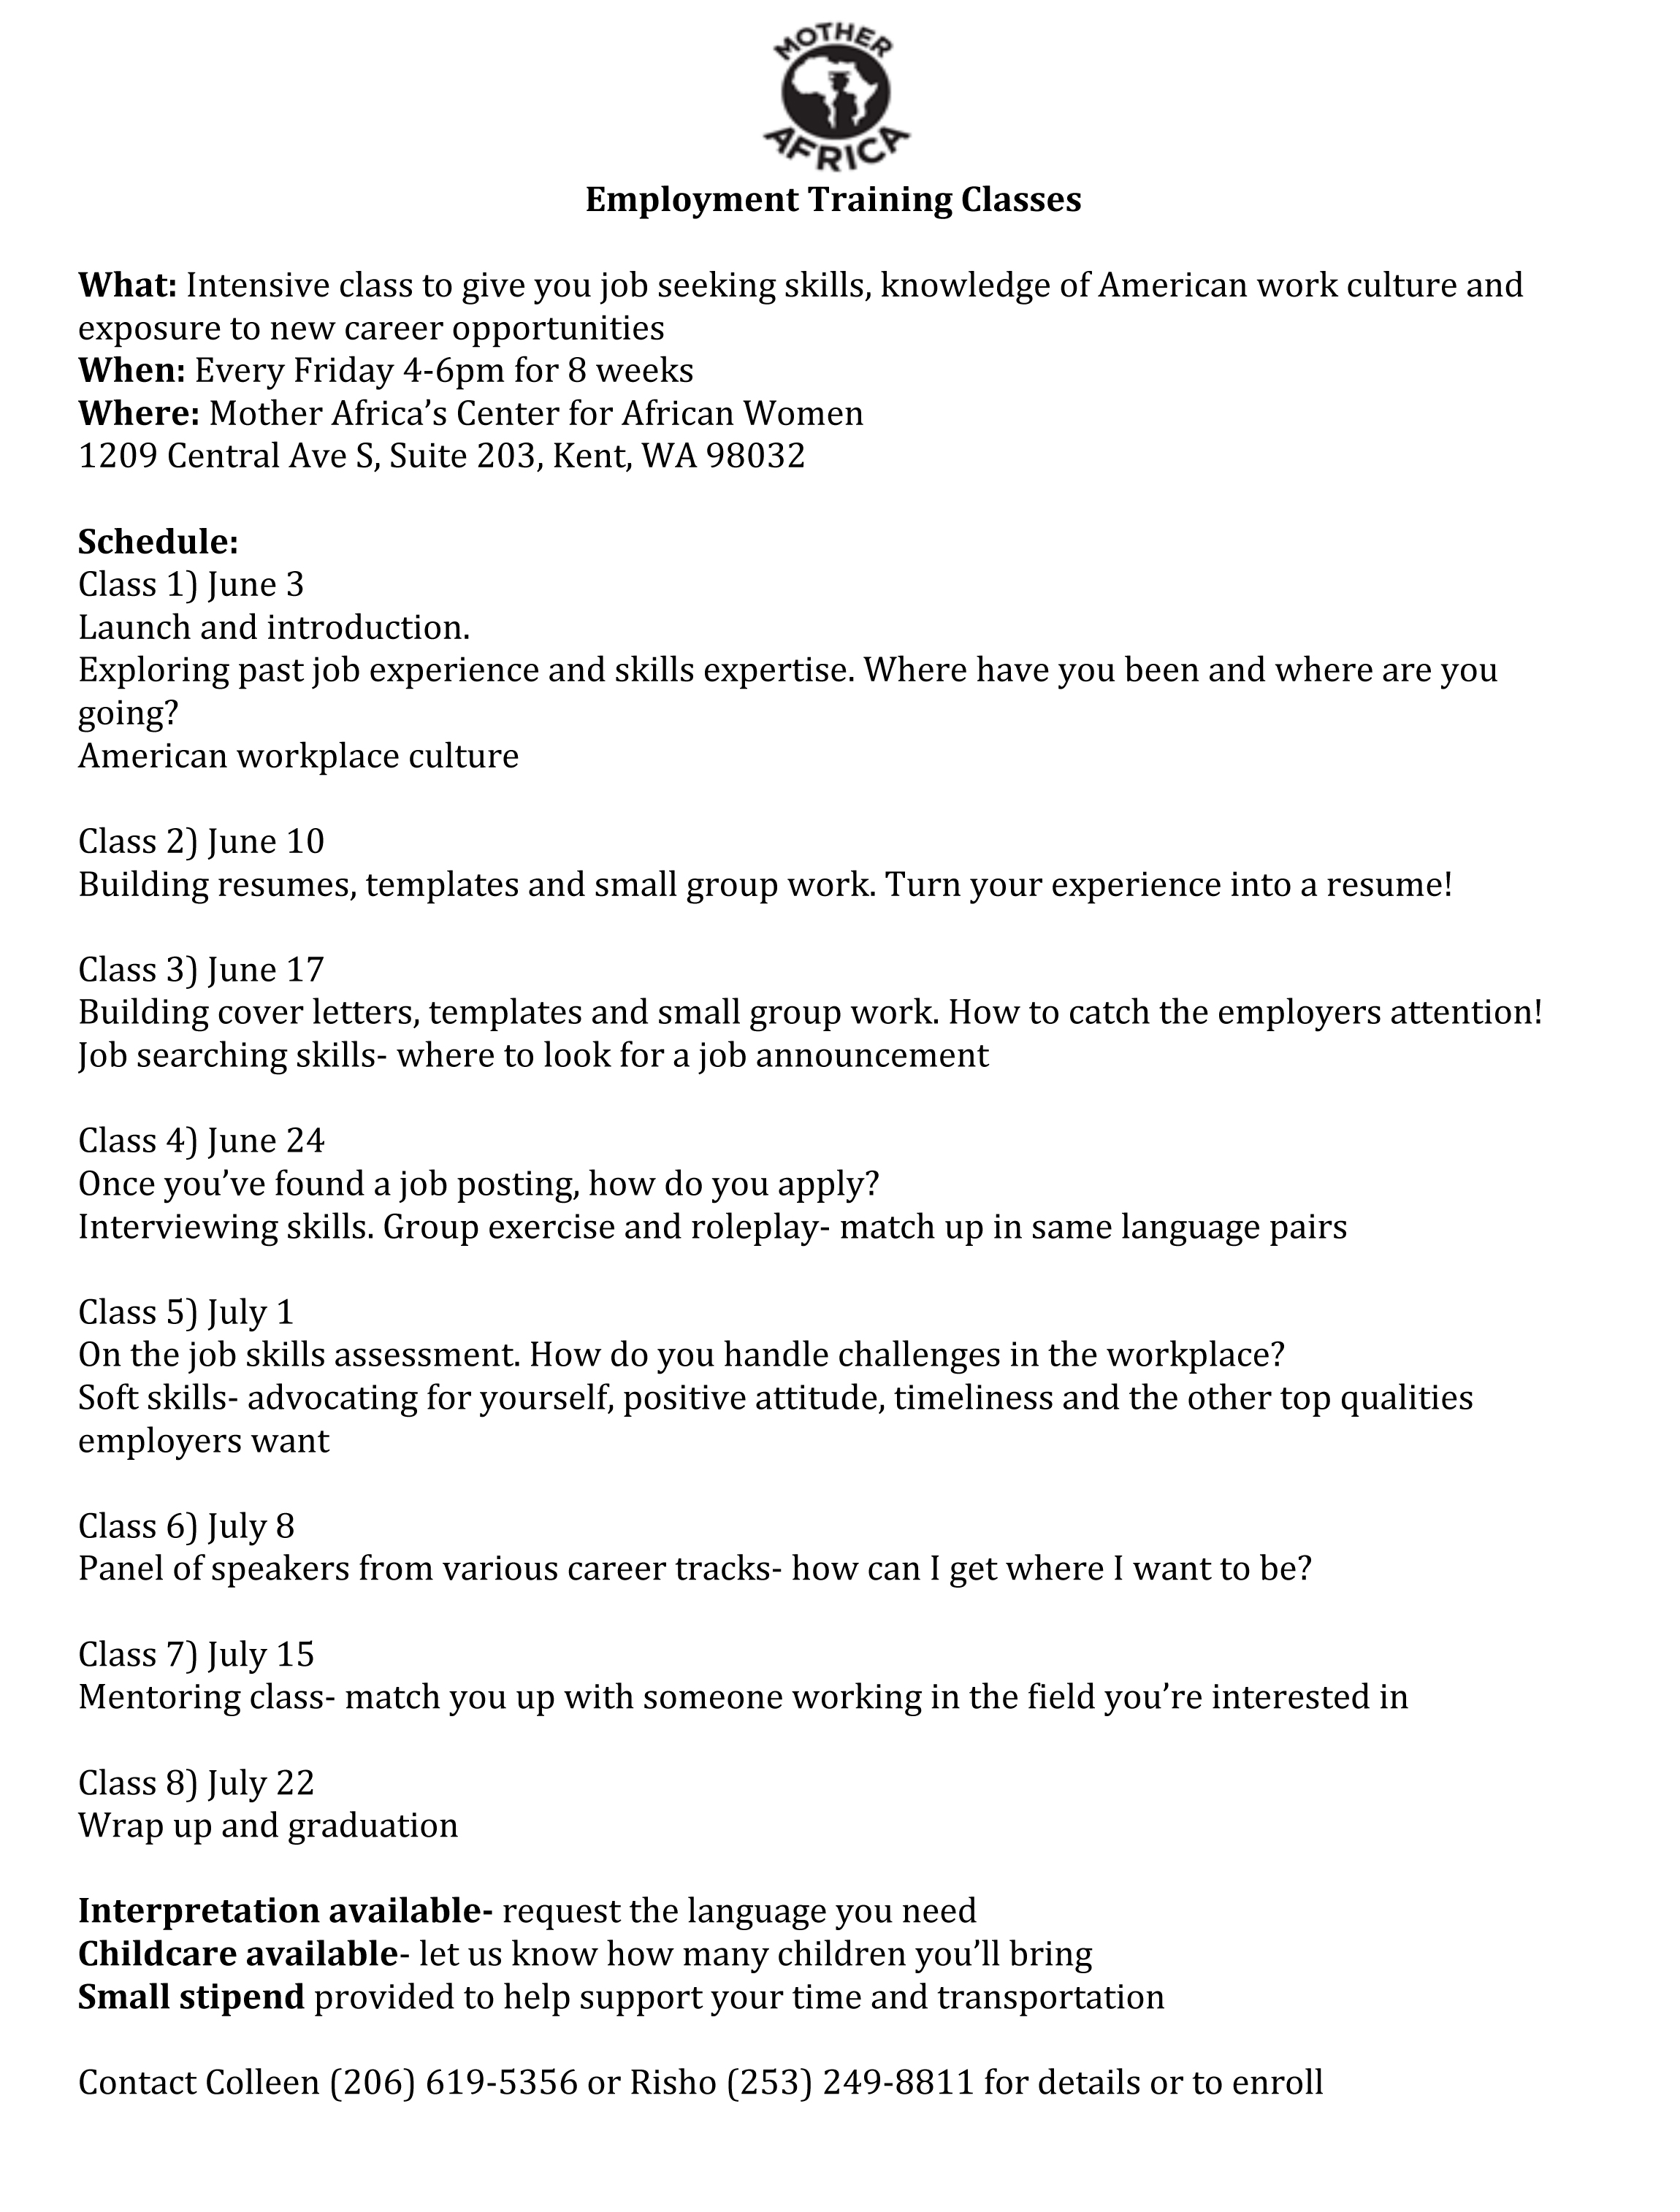 Microsoft Word - Employment Training Classes- Schedule.docx